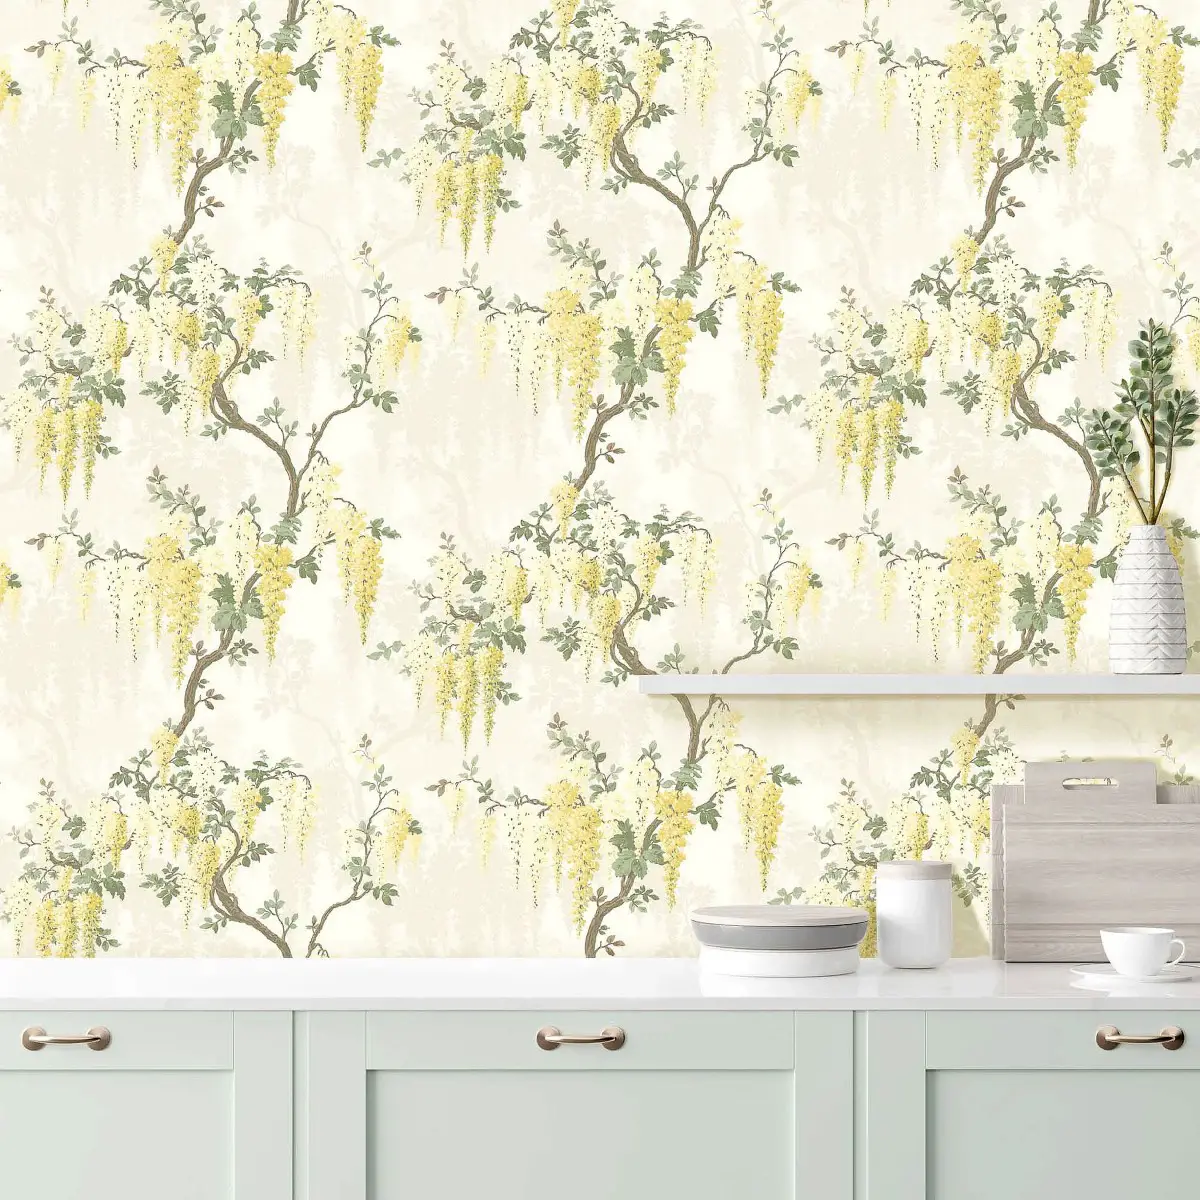 Wisteria in Lemon Yellow wallpaper in a kitchen